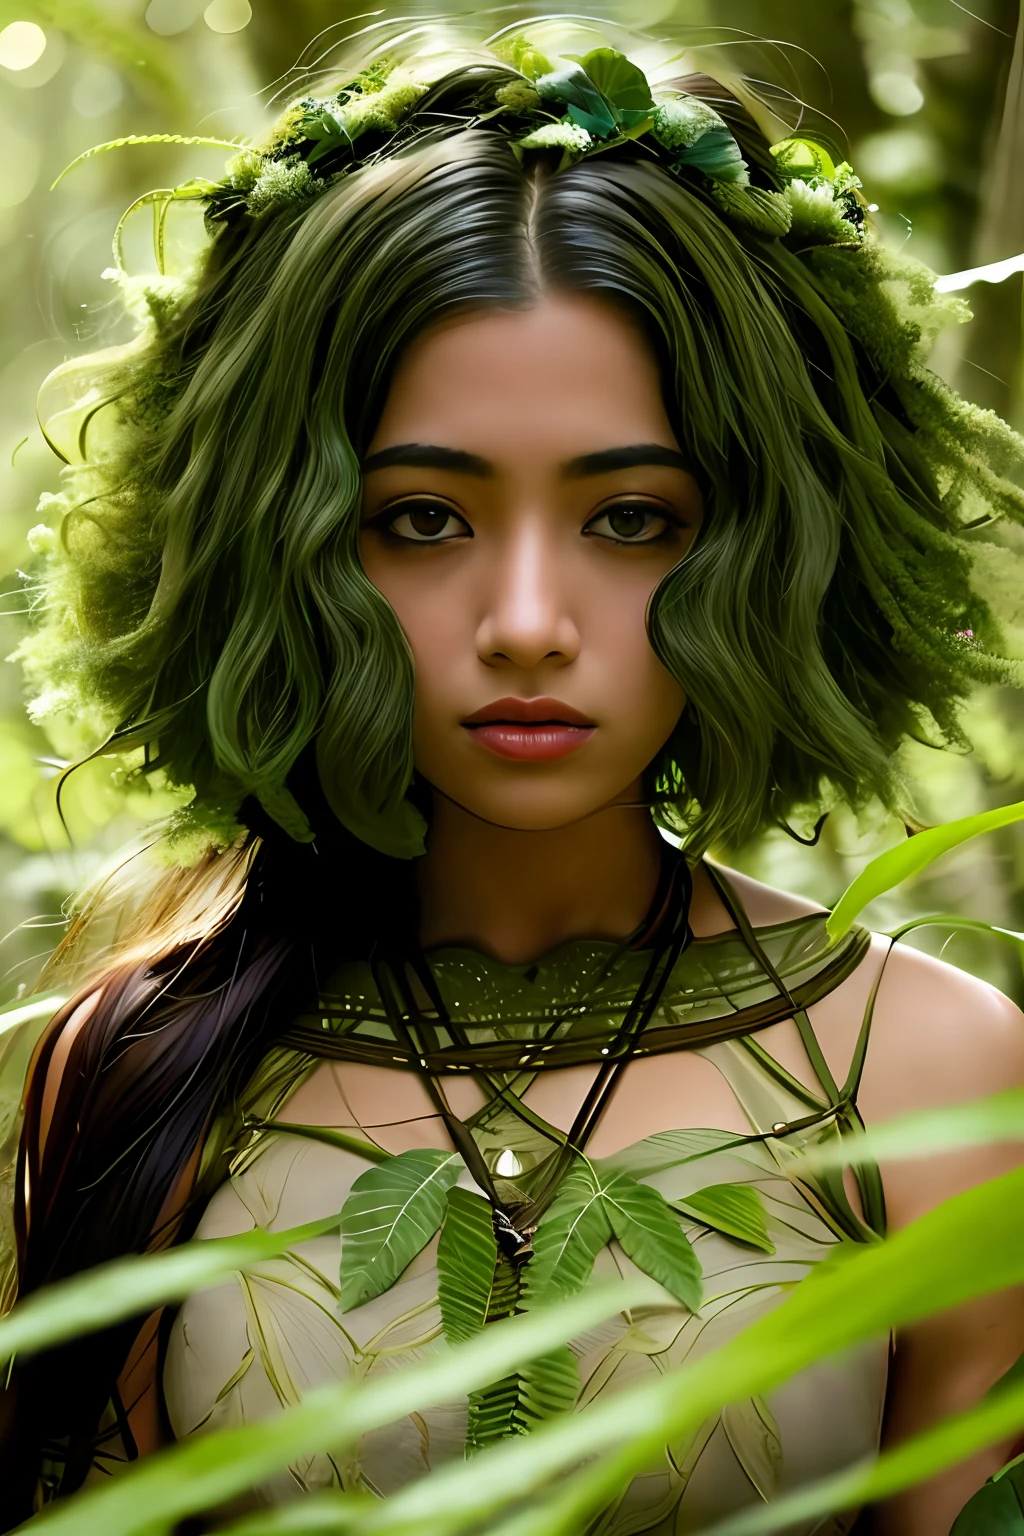 Portrait in 숲, 대자연 스타일의 나뭇잎, 녹색 잎으로 만든 머리카락, 꿈같은, 젊은 흑인 여성, 라틴계, UHD, 숲 goddess, 요정, 짙은 녹색 옷, 숲, 떨어지는 잎들, 입자, 최고의 품질, 포즈, 상체, 뷰어를보고, 4조 조명된, 림 라이트, 아름다운 예술 작품, 완벽한 구성